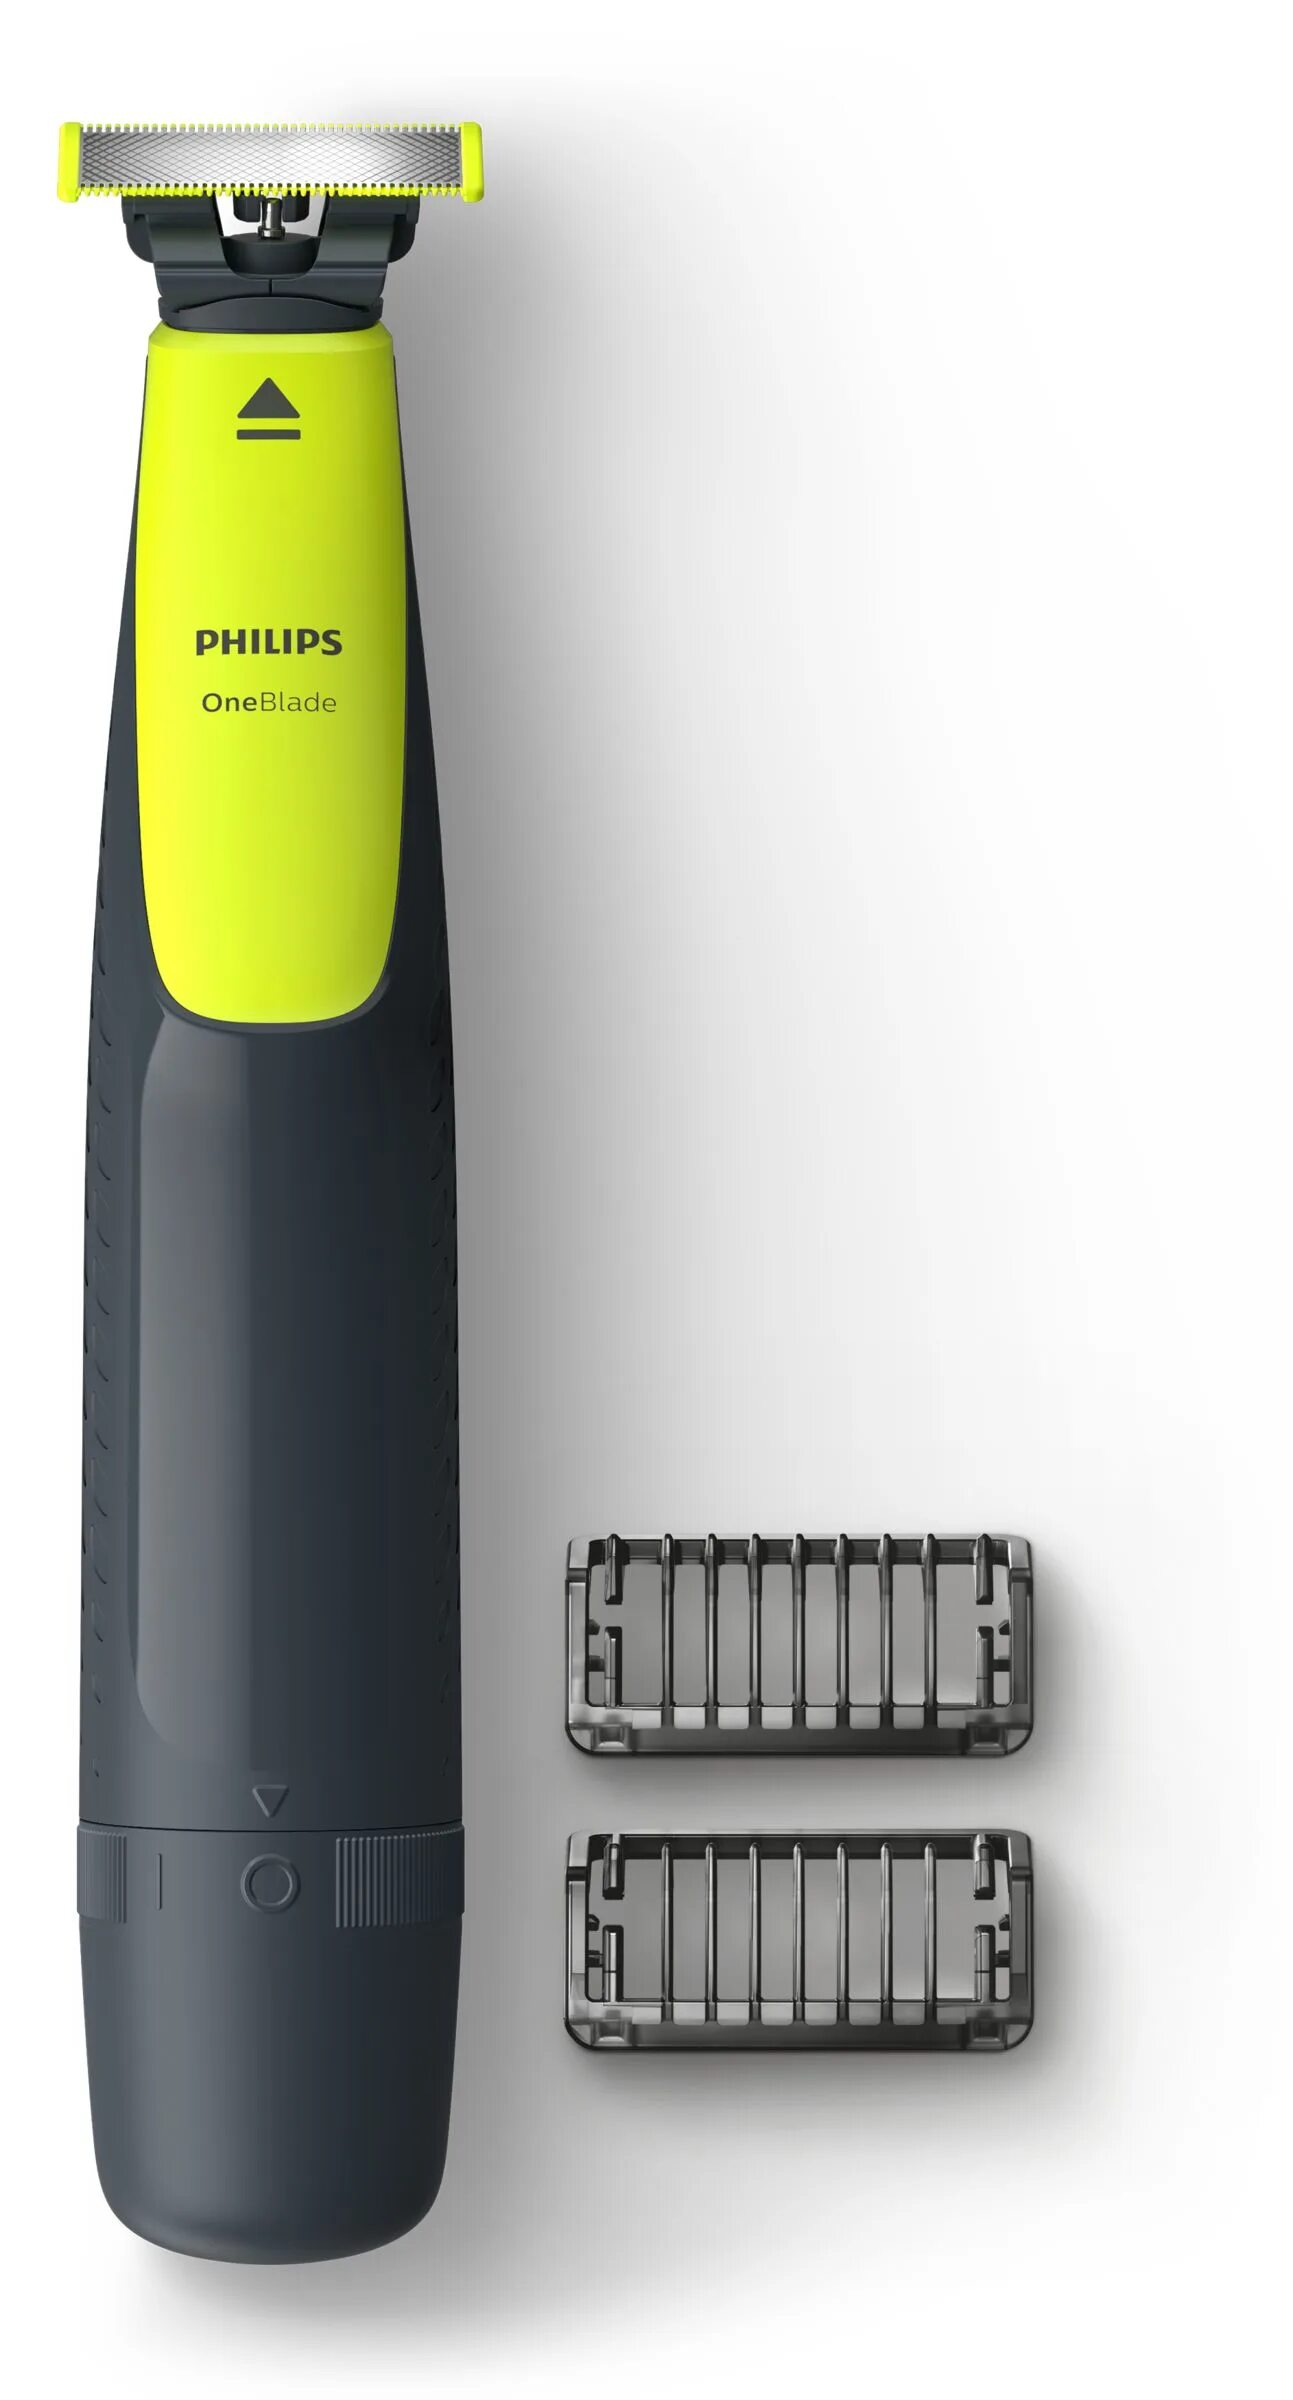 Филипс ван купить. Philips qp2510. Philips one Blade qp2510/11. Триммер Philips qp2510. Триммер Ван блейд 2510.